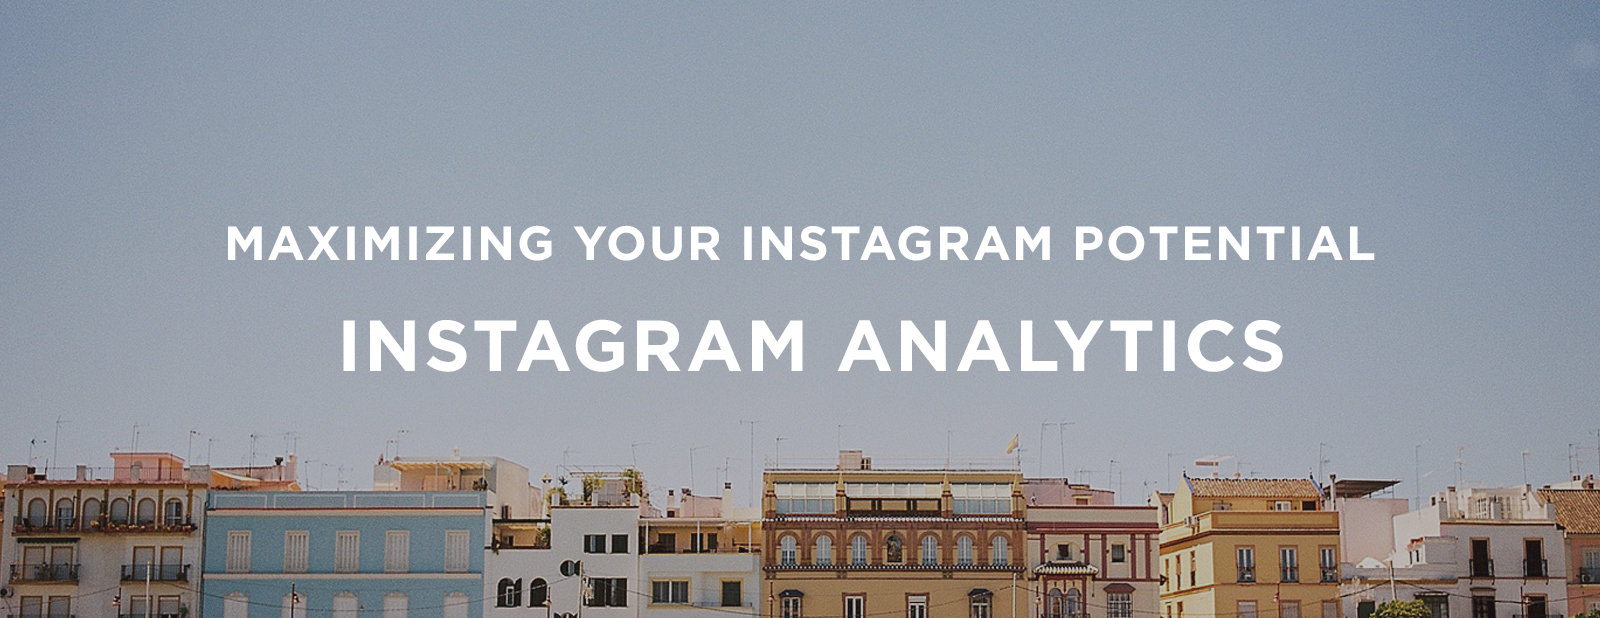 Instagram Analytics | via the Rising Tide Society